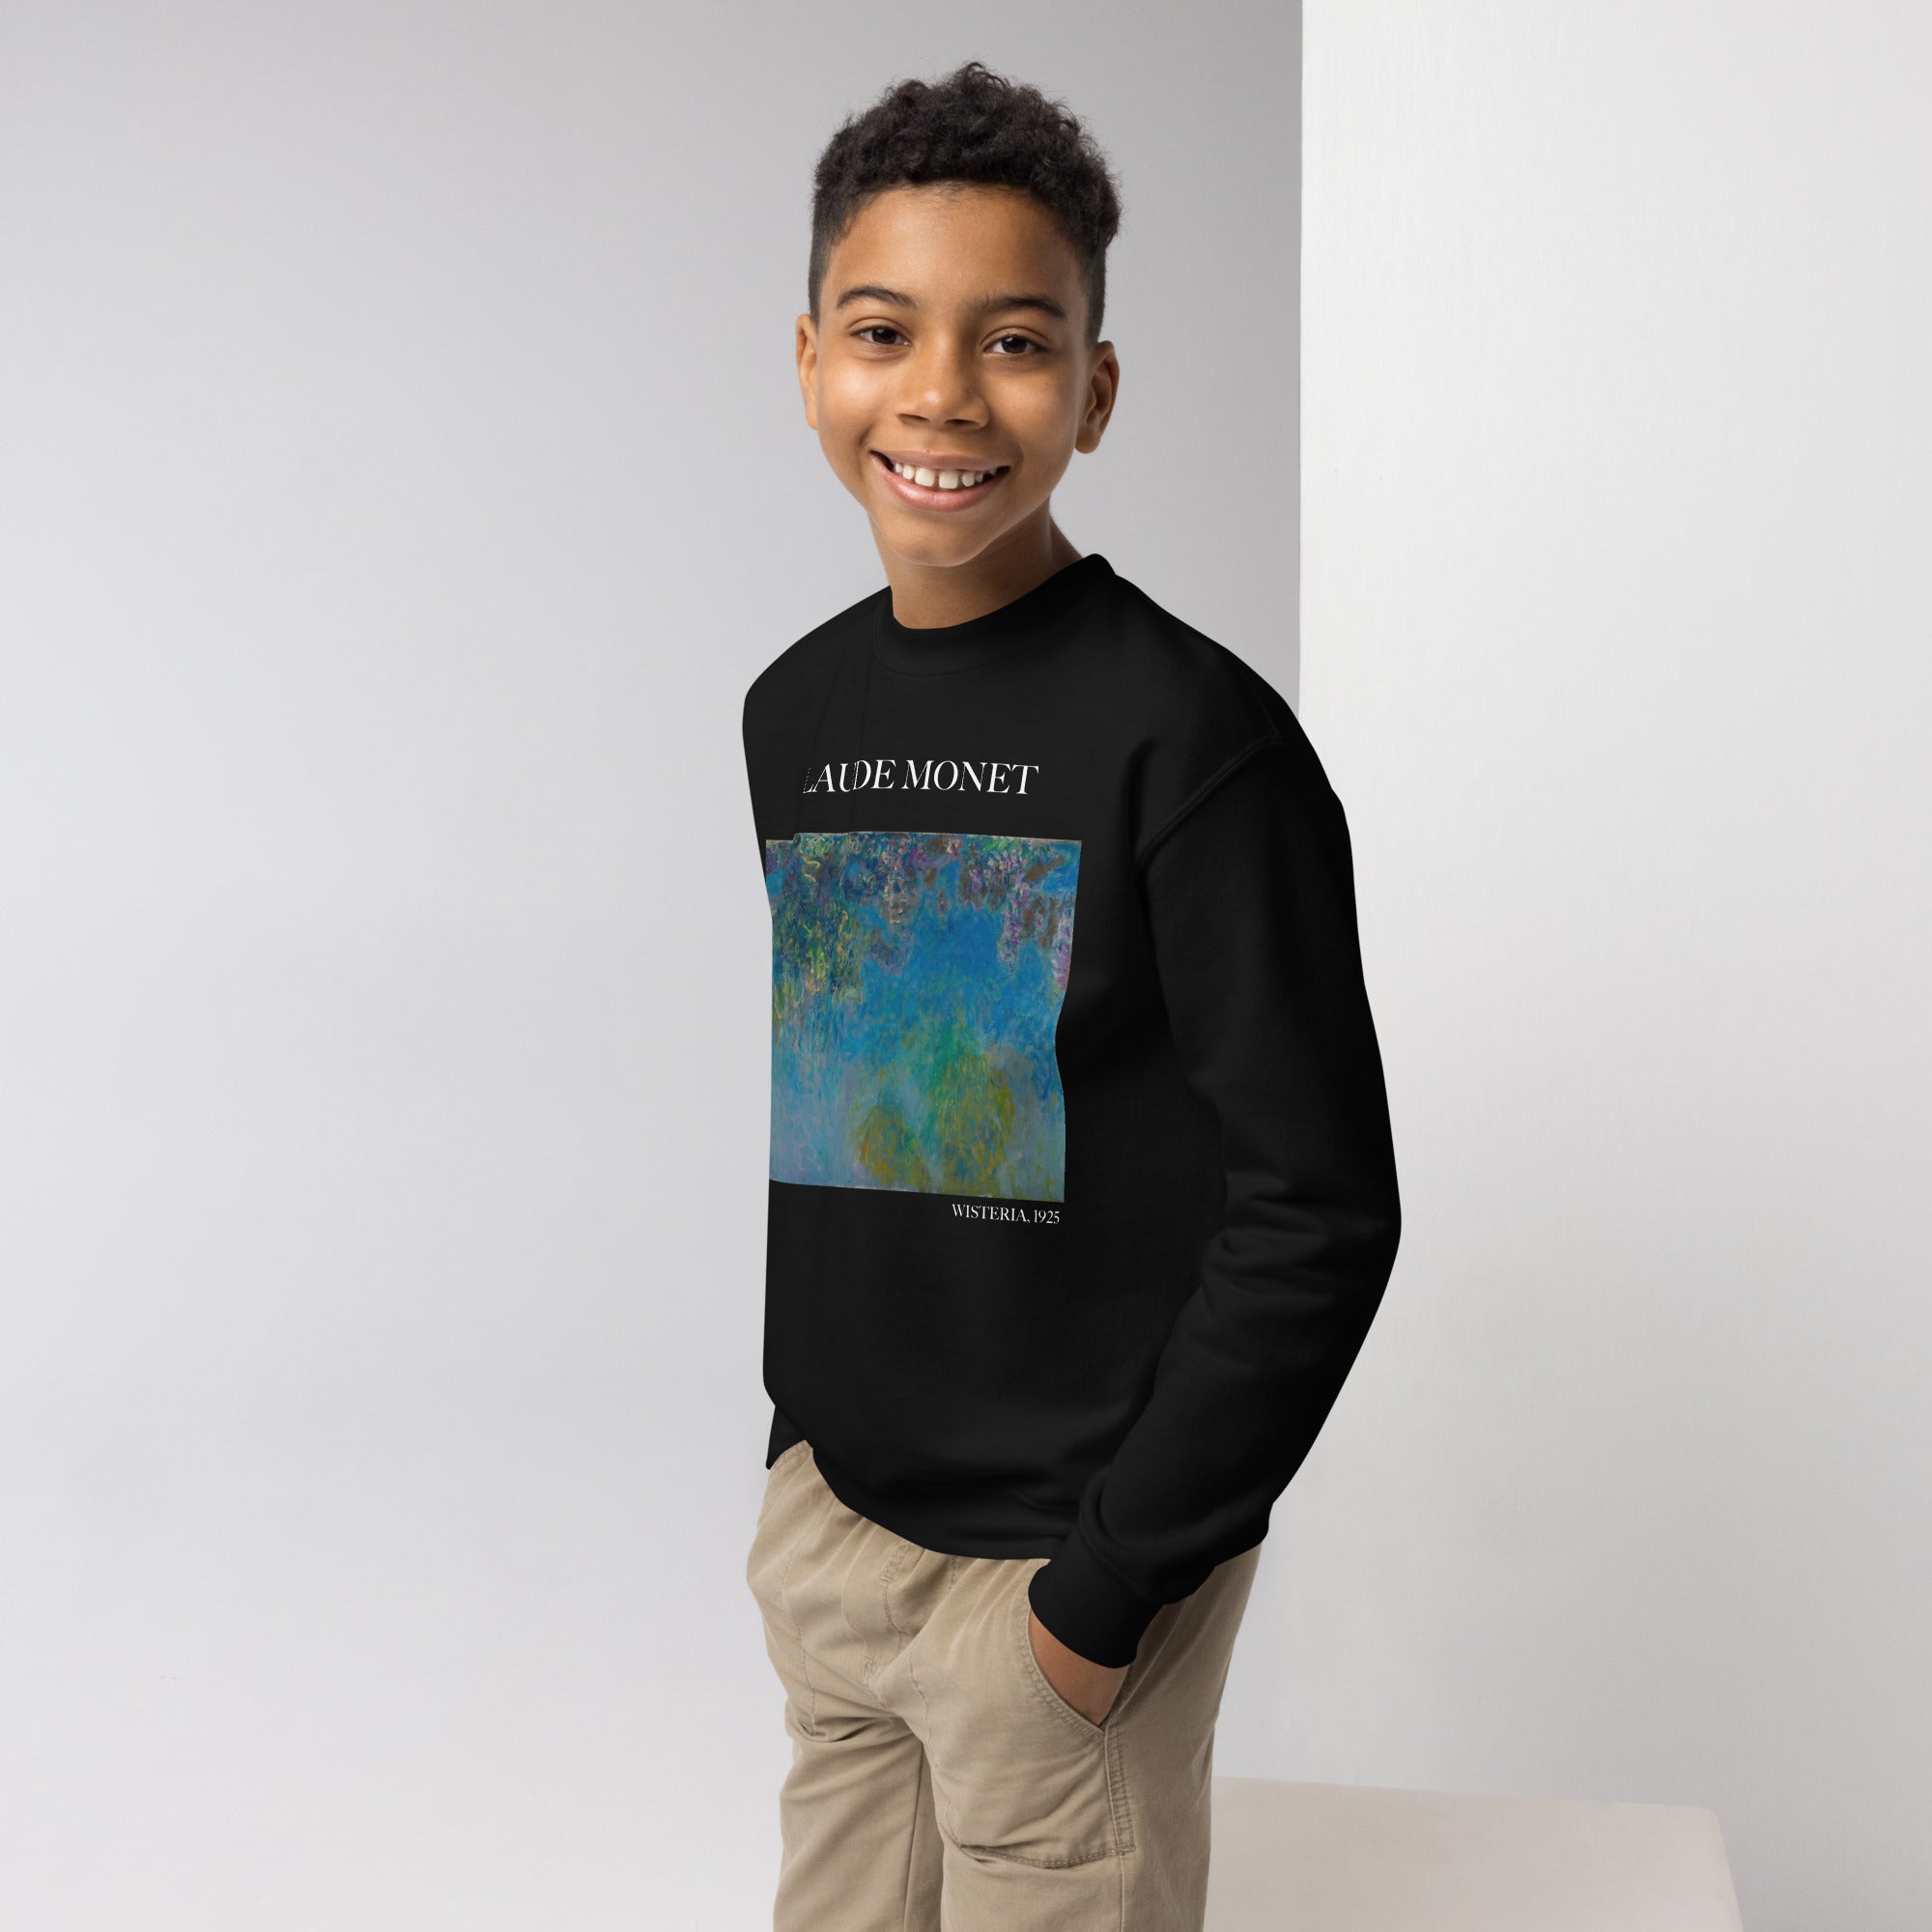 Claude Monet 'Wisteria' Famous Painting Crewneck Sweatshirt | Premium Youth Art Sweatshirt